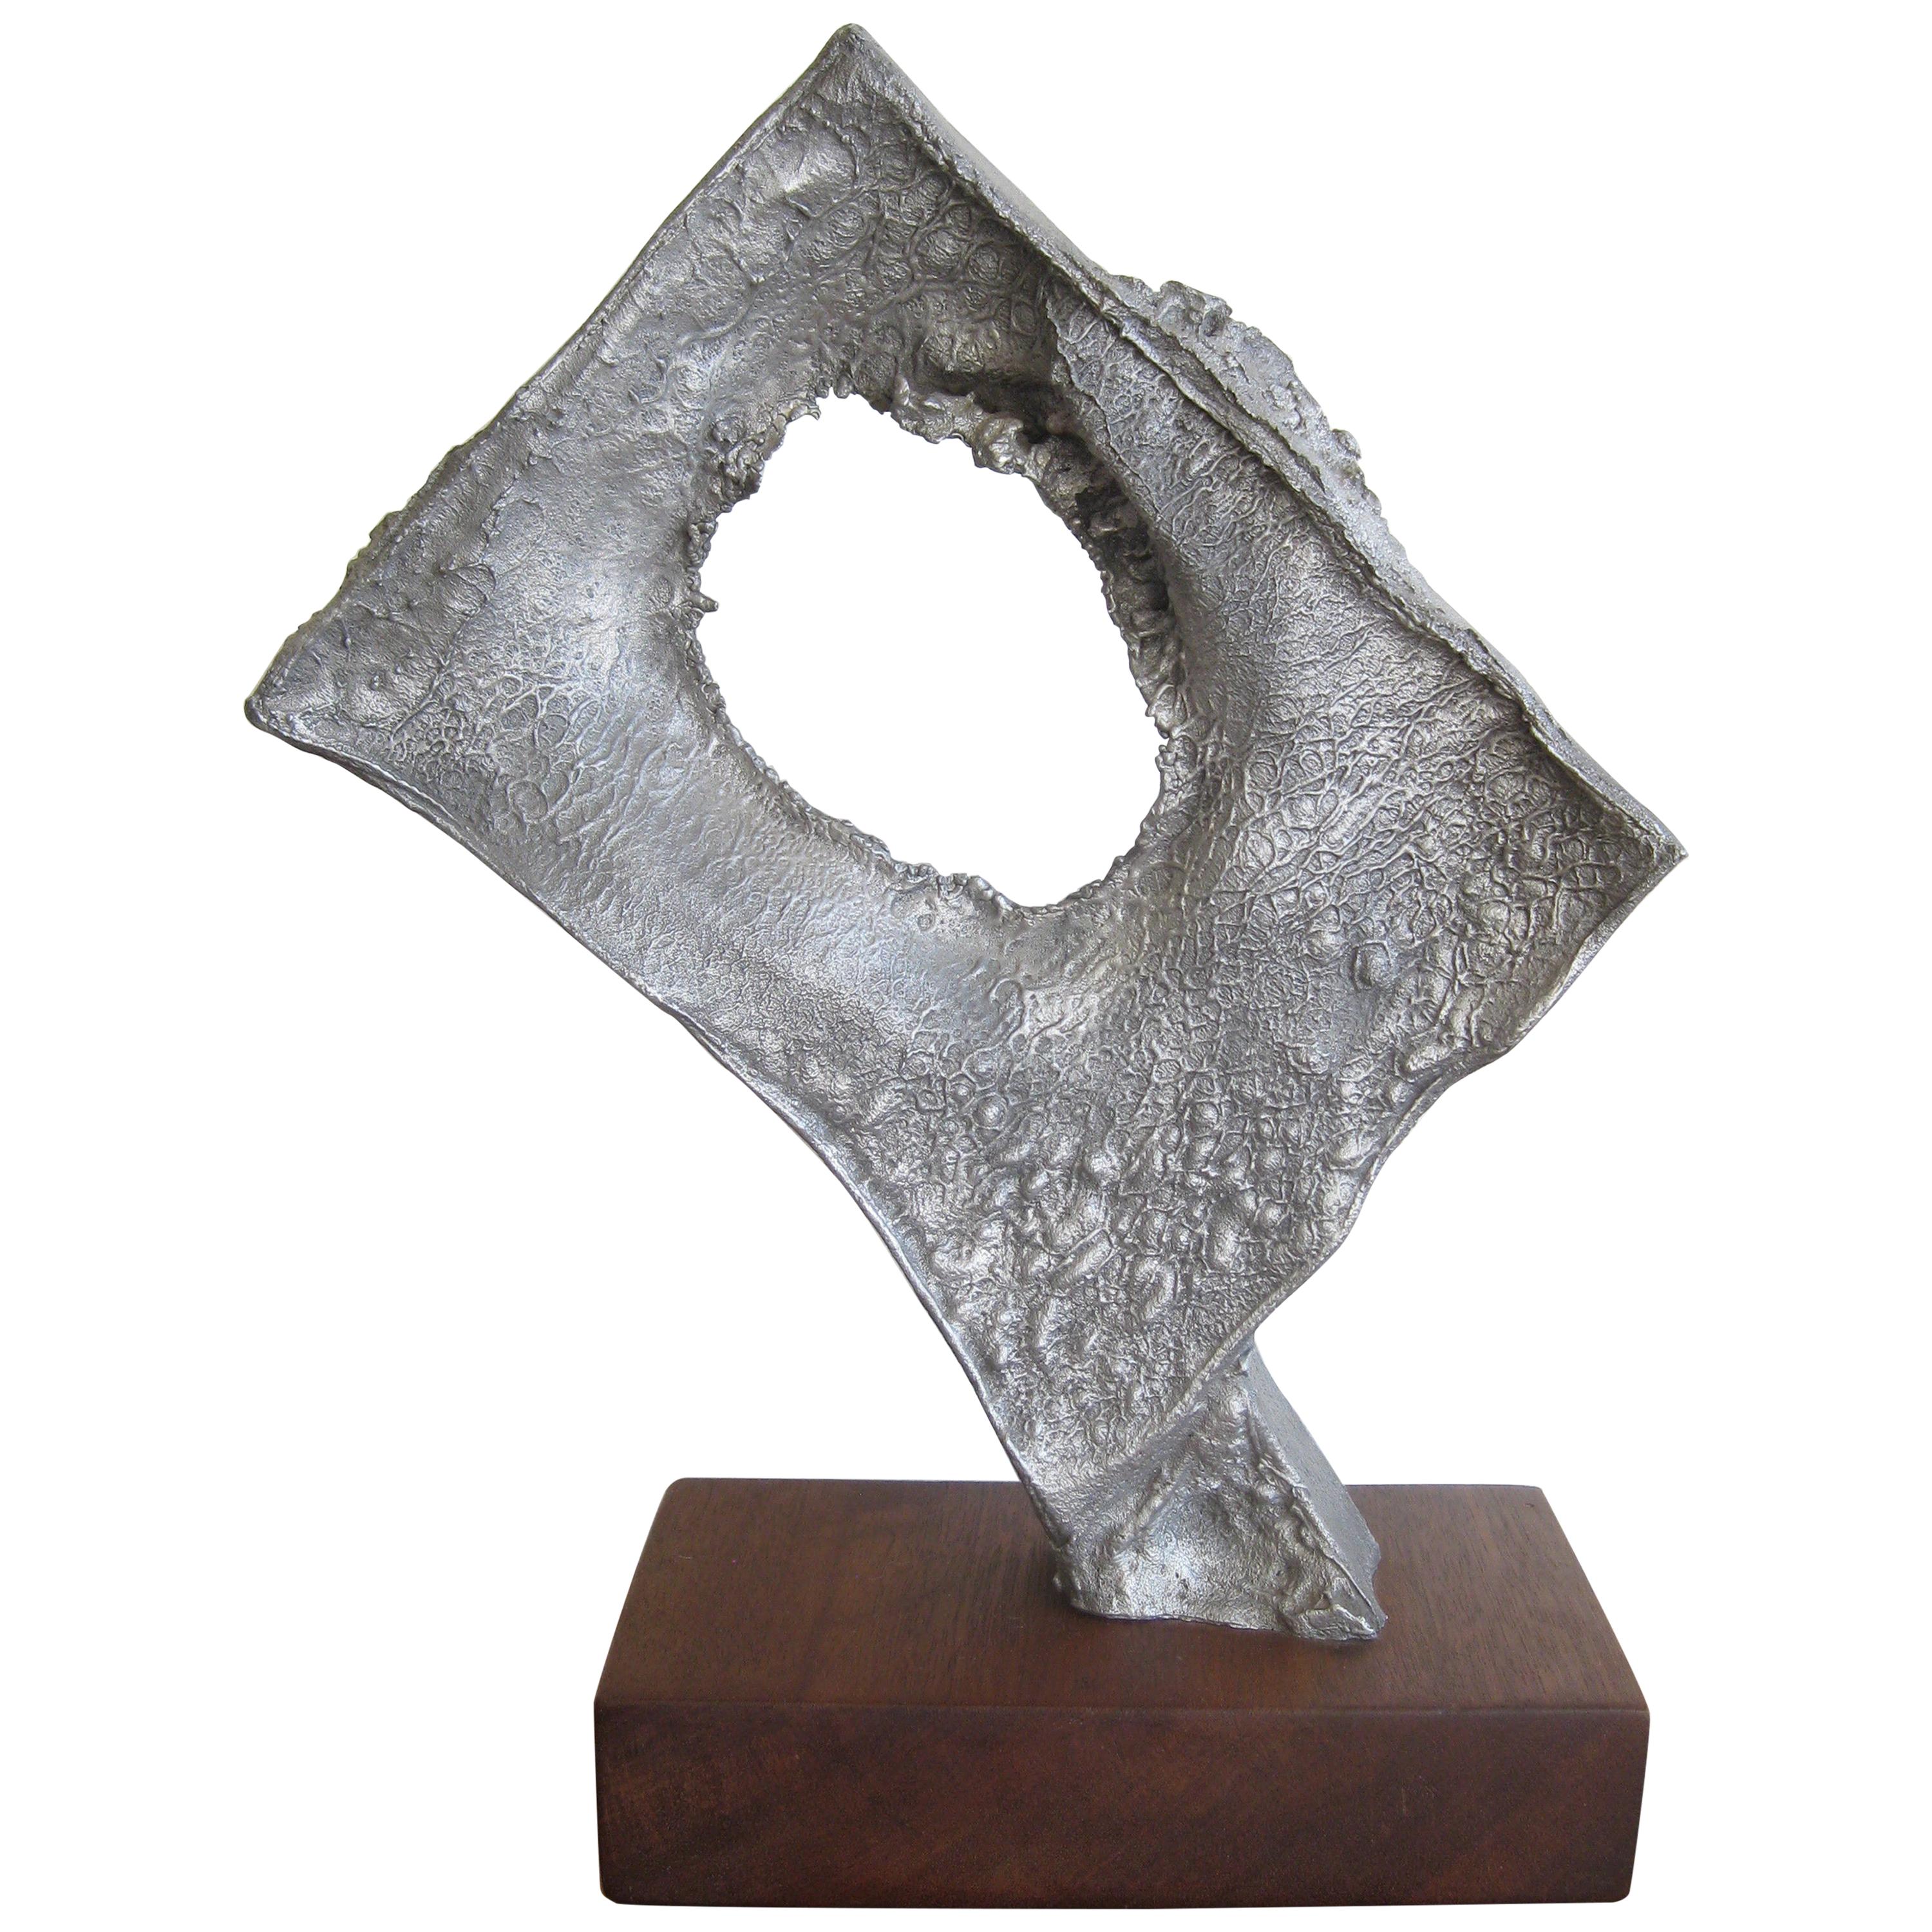 Midcentury Brutalist Abstract Cast Aluminum Sculpture Manner of Donald Drumm